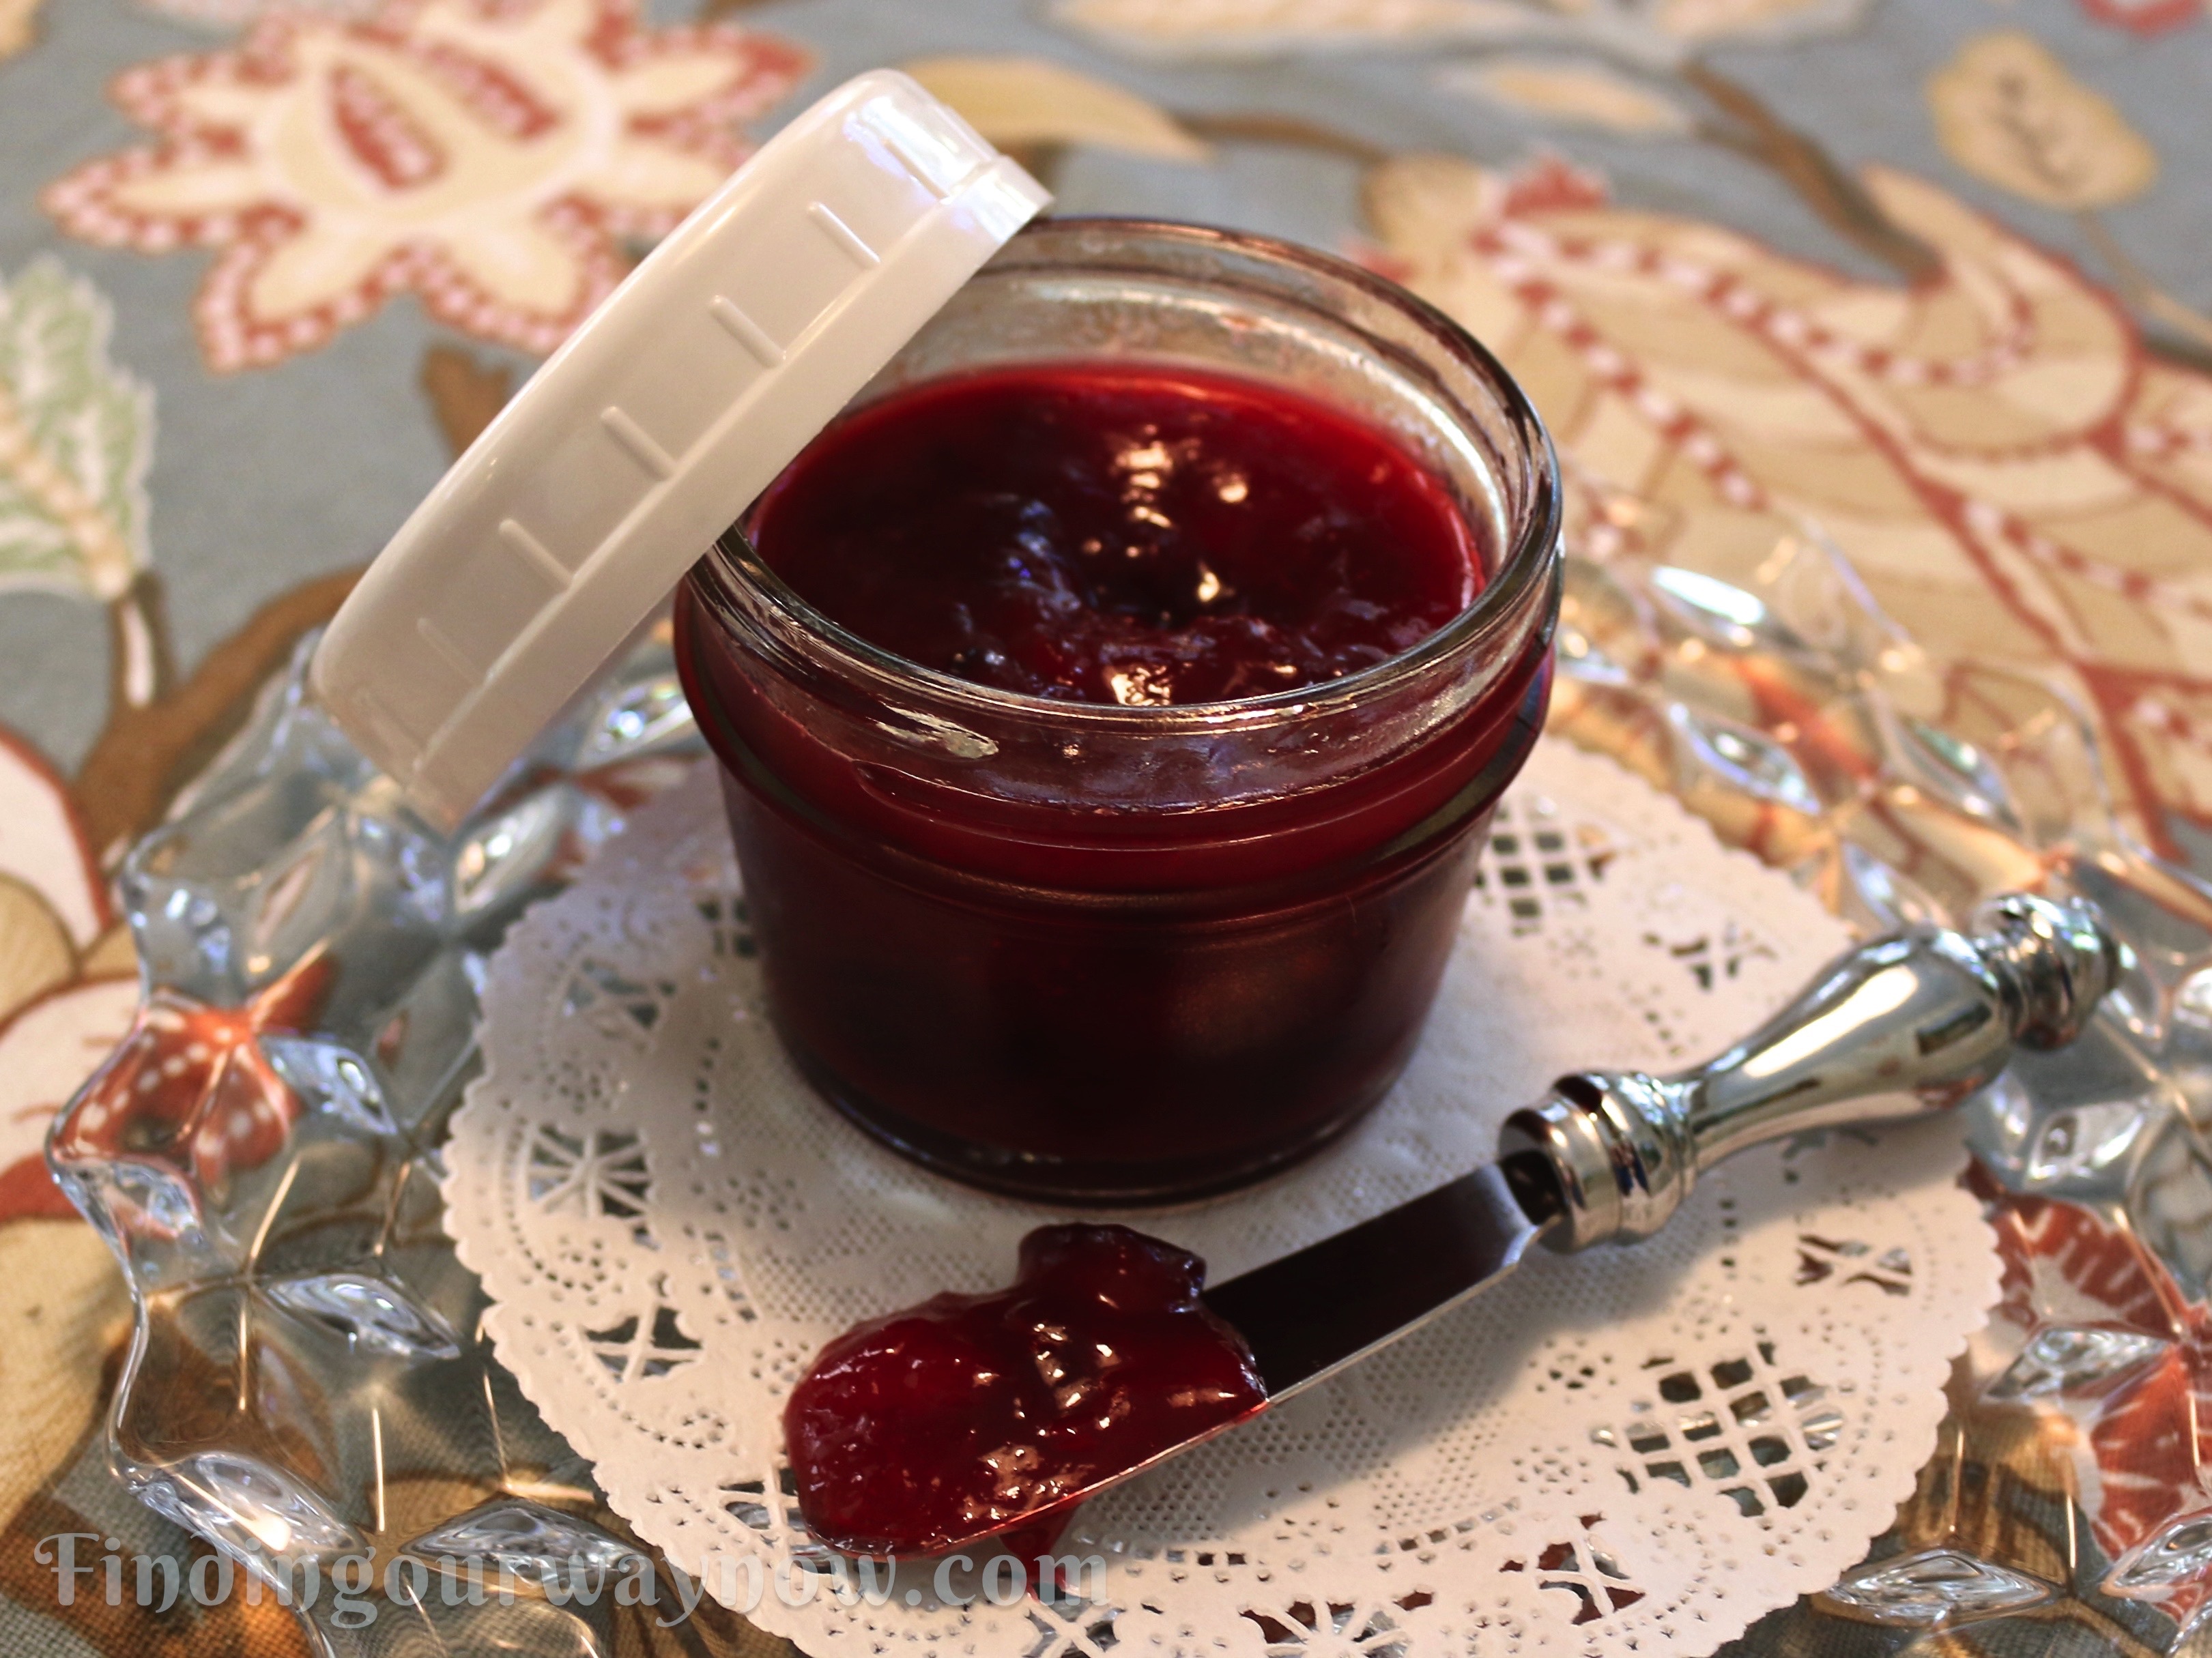 What is a good homemade plum jam recipe?